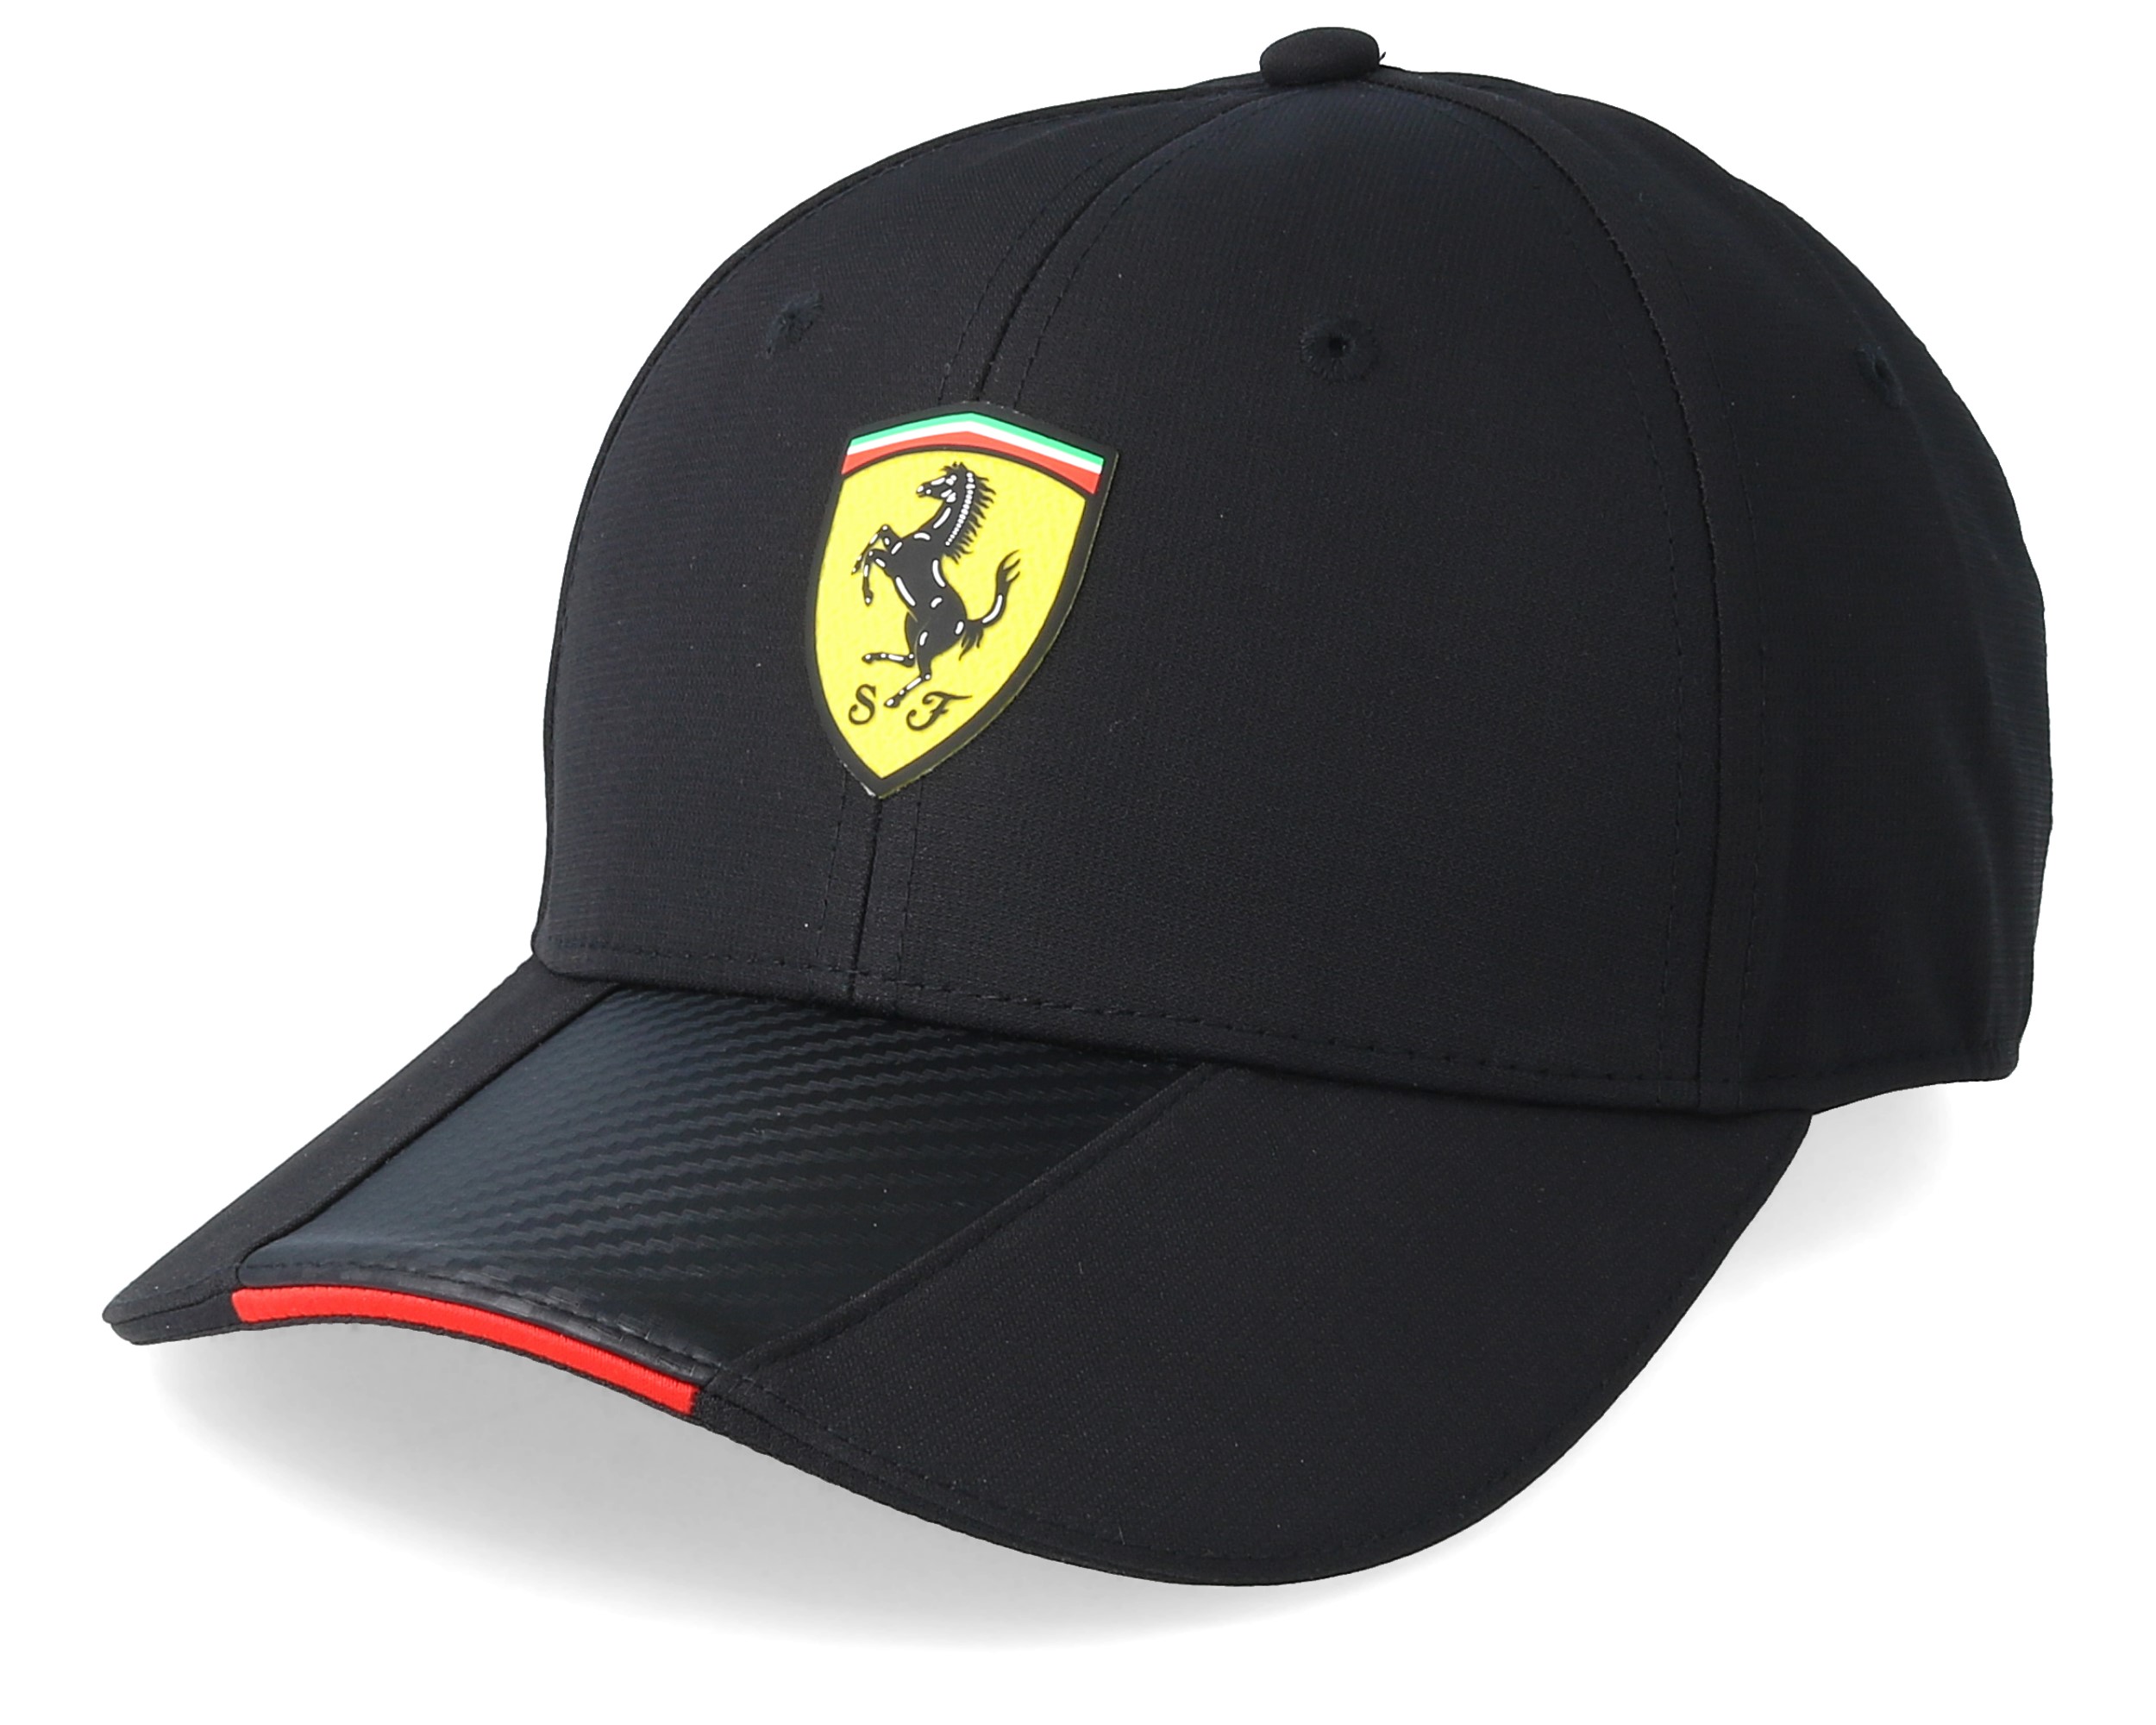 Scuderia Ferrari Scudetto Black/Carbon Adjustable - Formula One caps ...